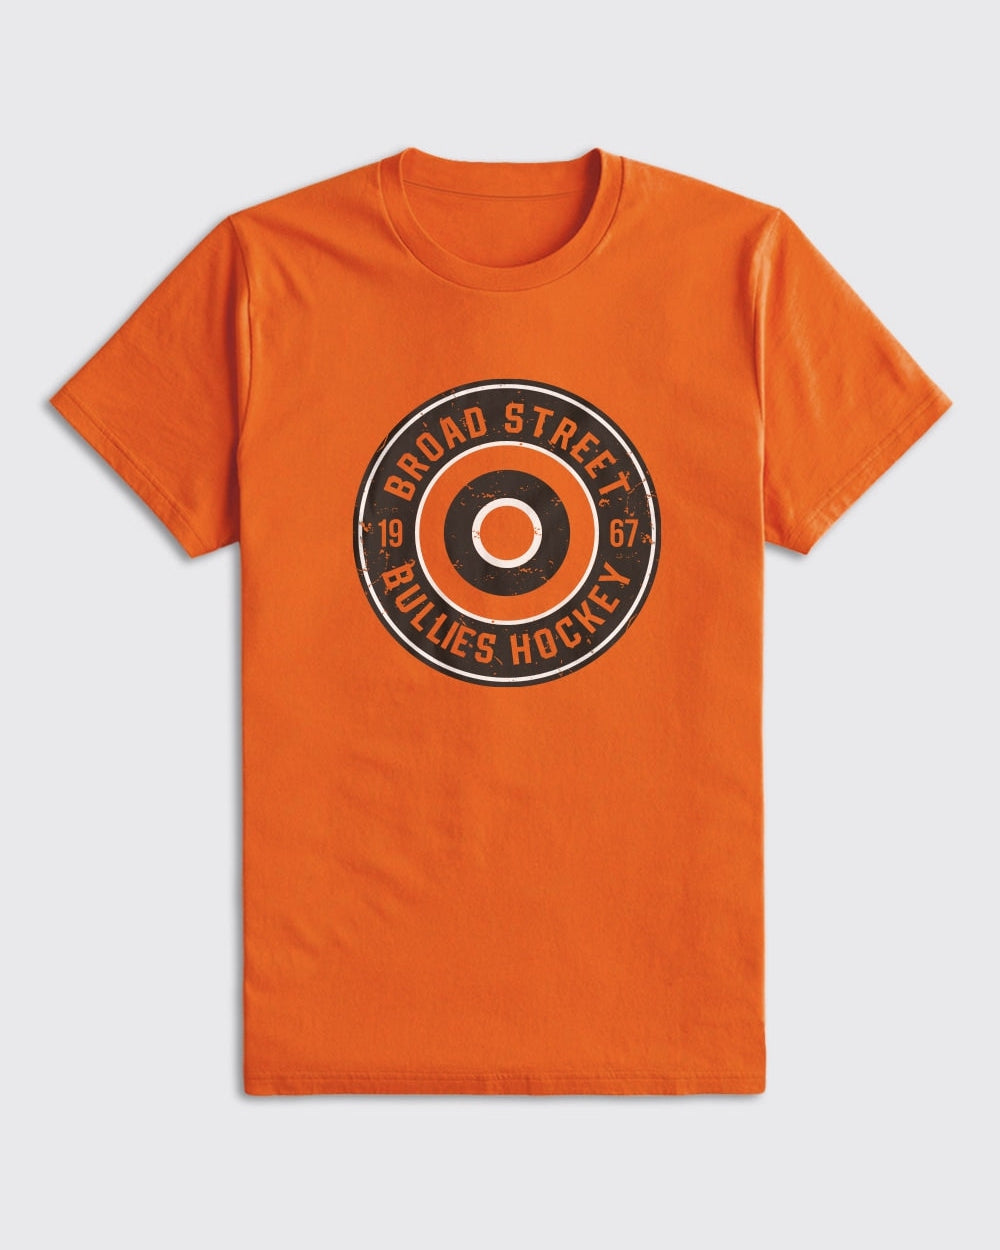 Broad Street Bullies Hockey Shirt - Flyers, T-Shirts - Philly Sports Shirts